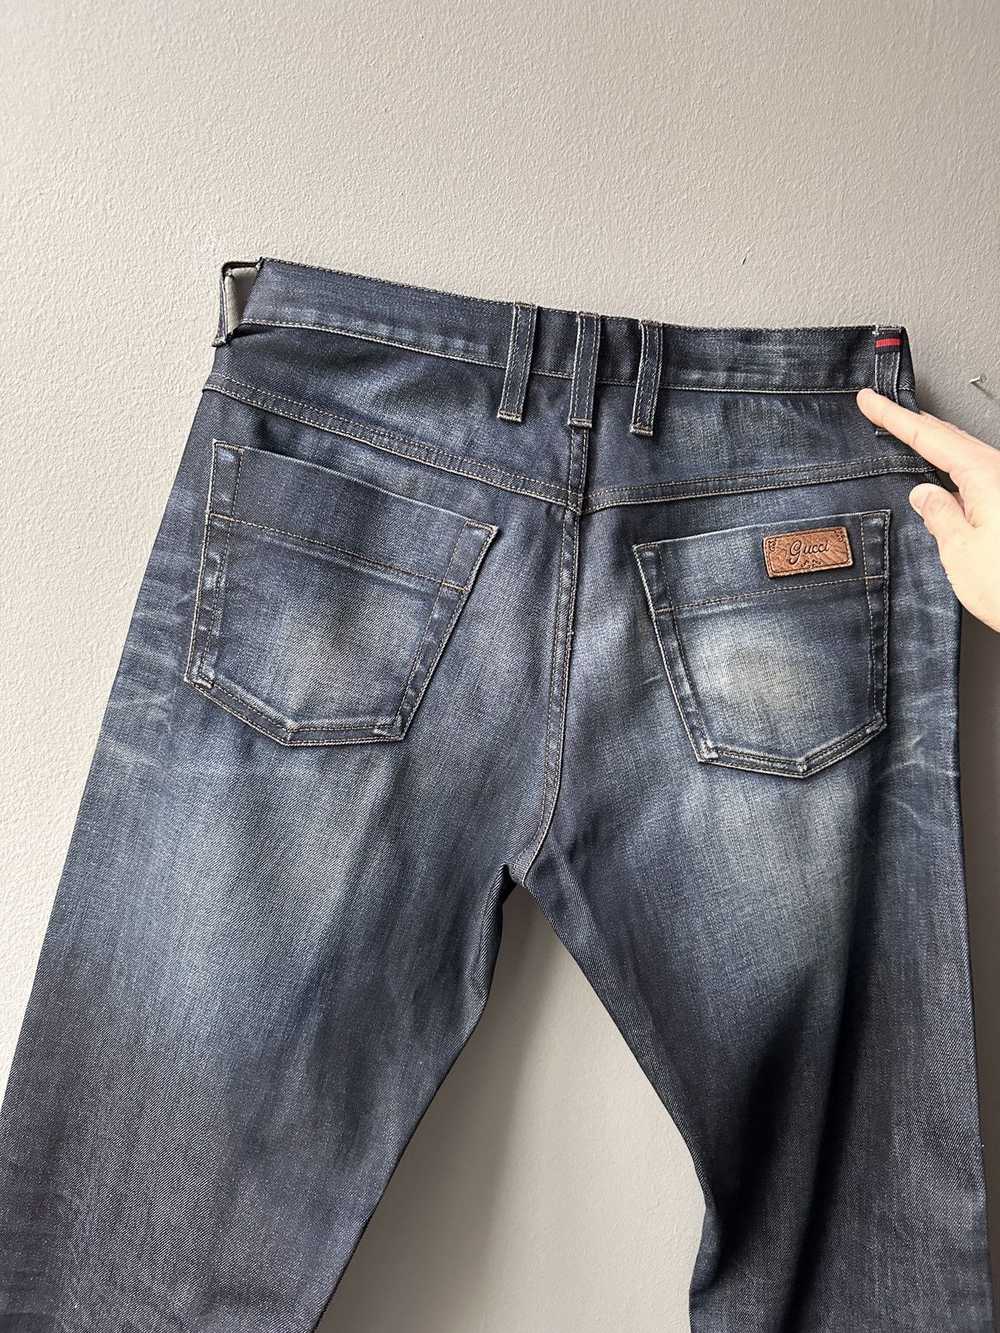 Gucci GUCCI denim LEATHER Logo Jeans Pants - image 4